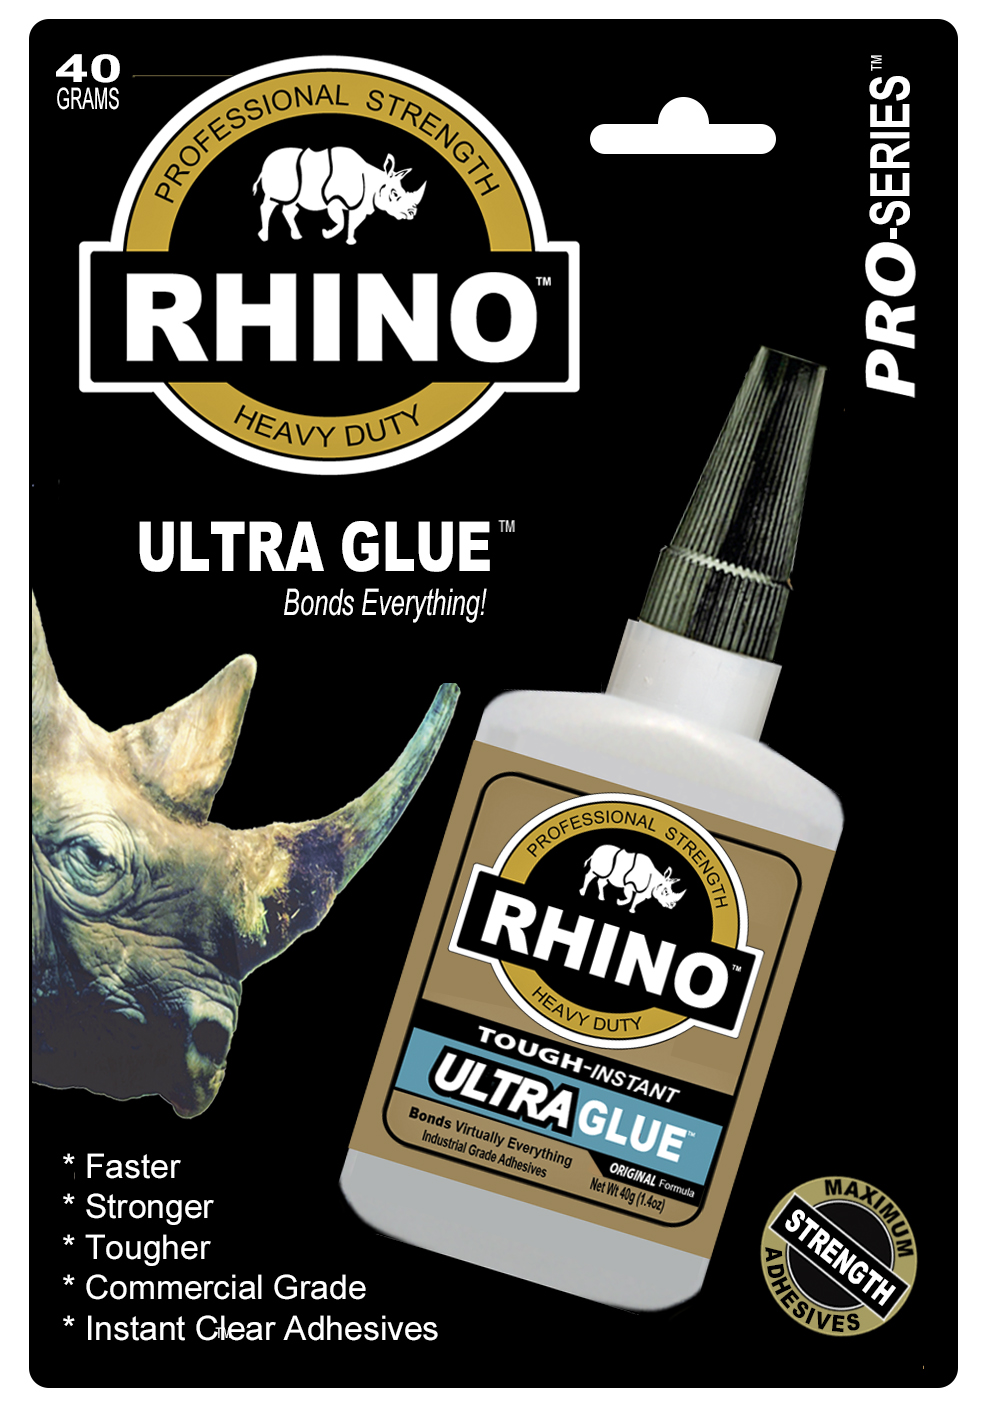 Where To Purchase Rhino Glue